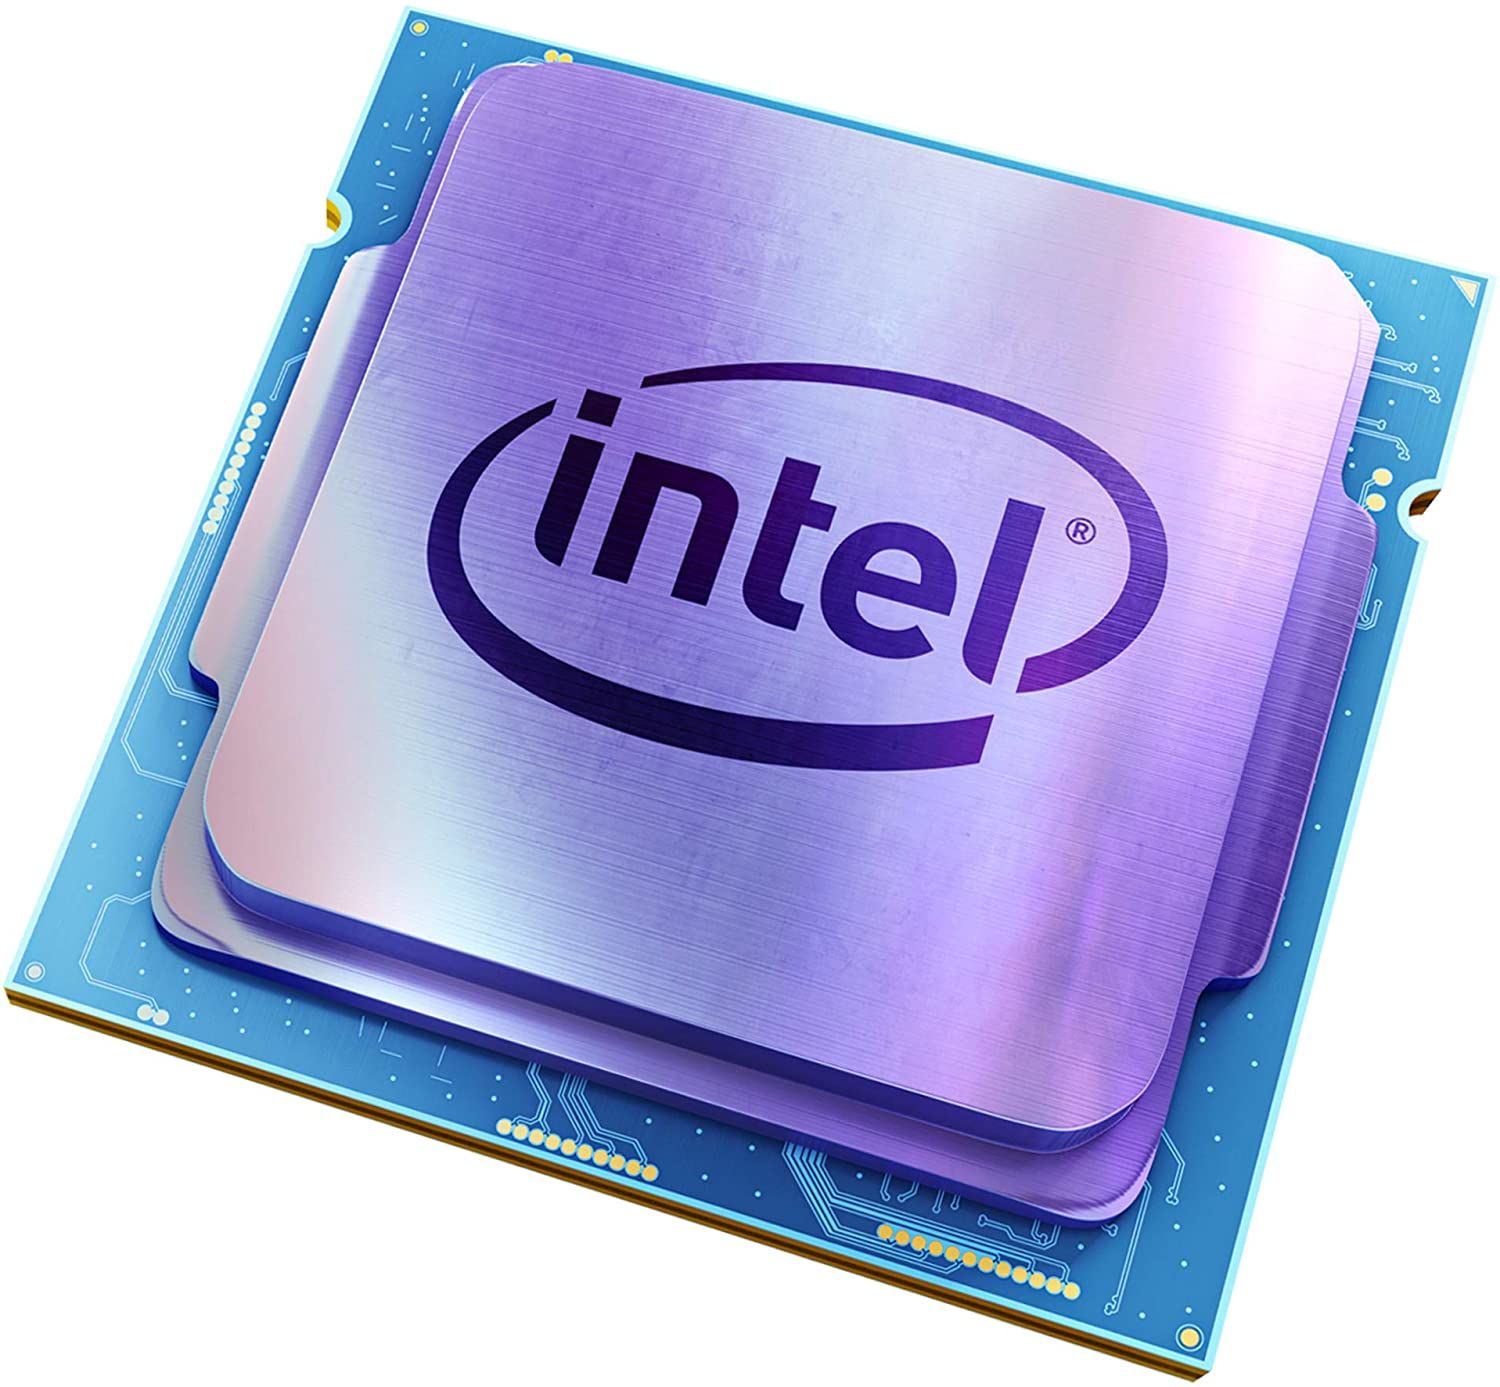 Intel Core i9-10900K chip